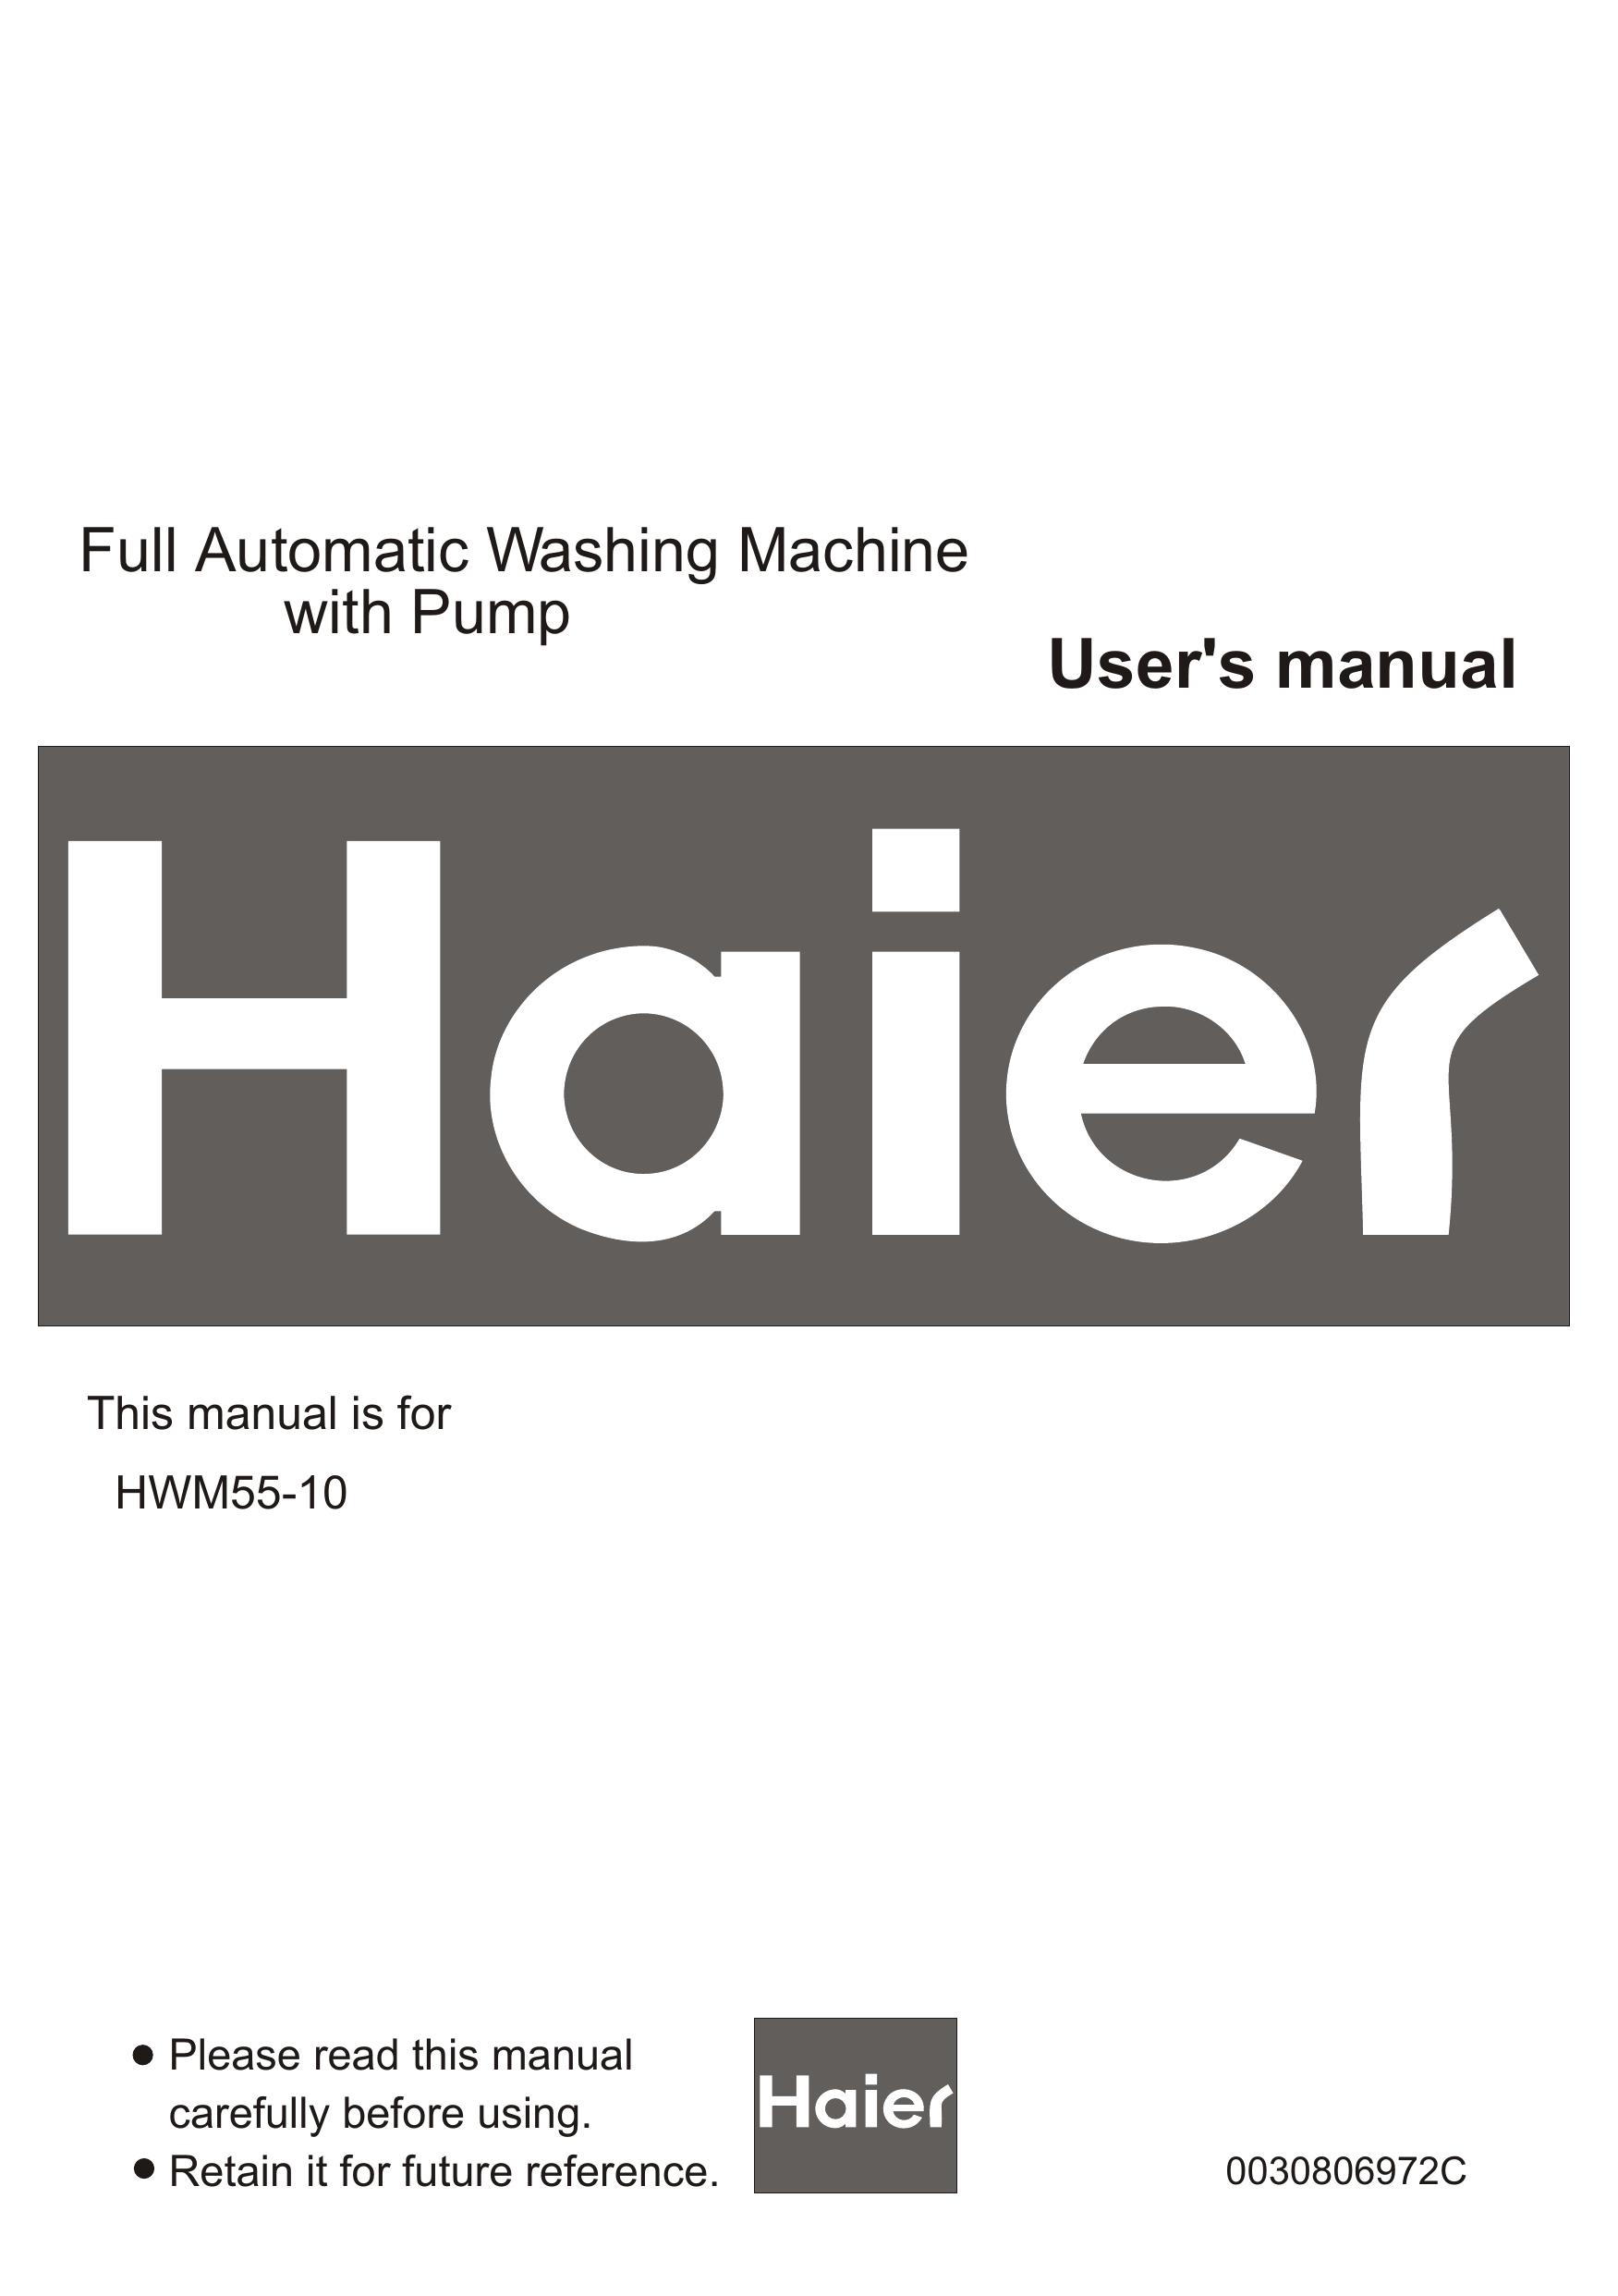 Haier HWM55-10 Washer/Dryer User Manual